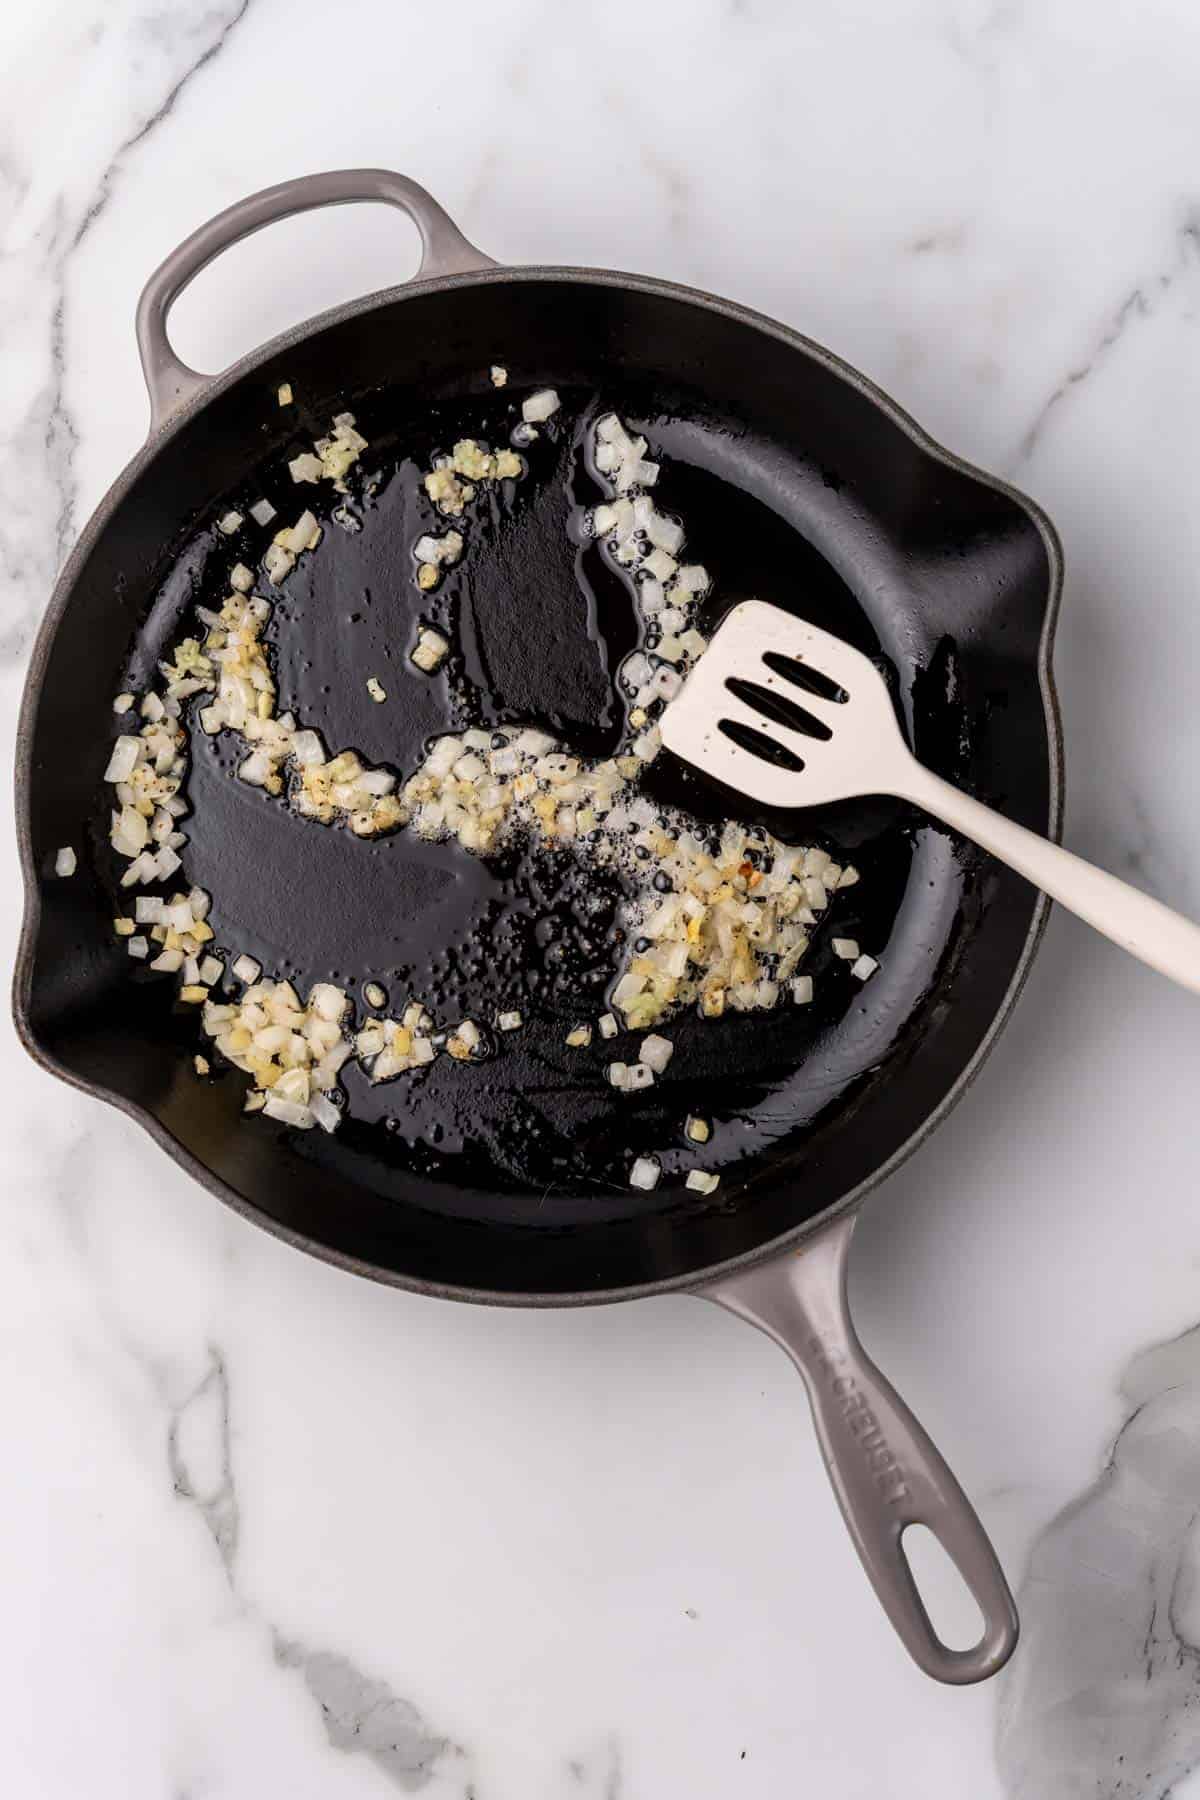 Oil, onion, garlic, and seasoning sautéing in a pan